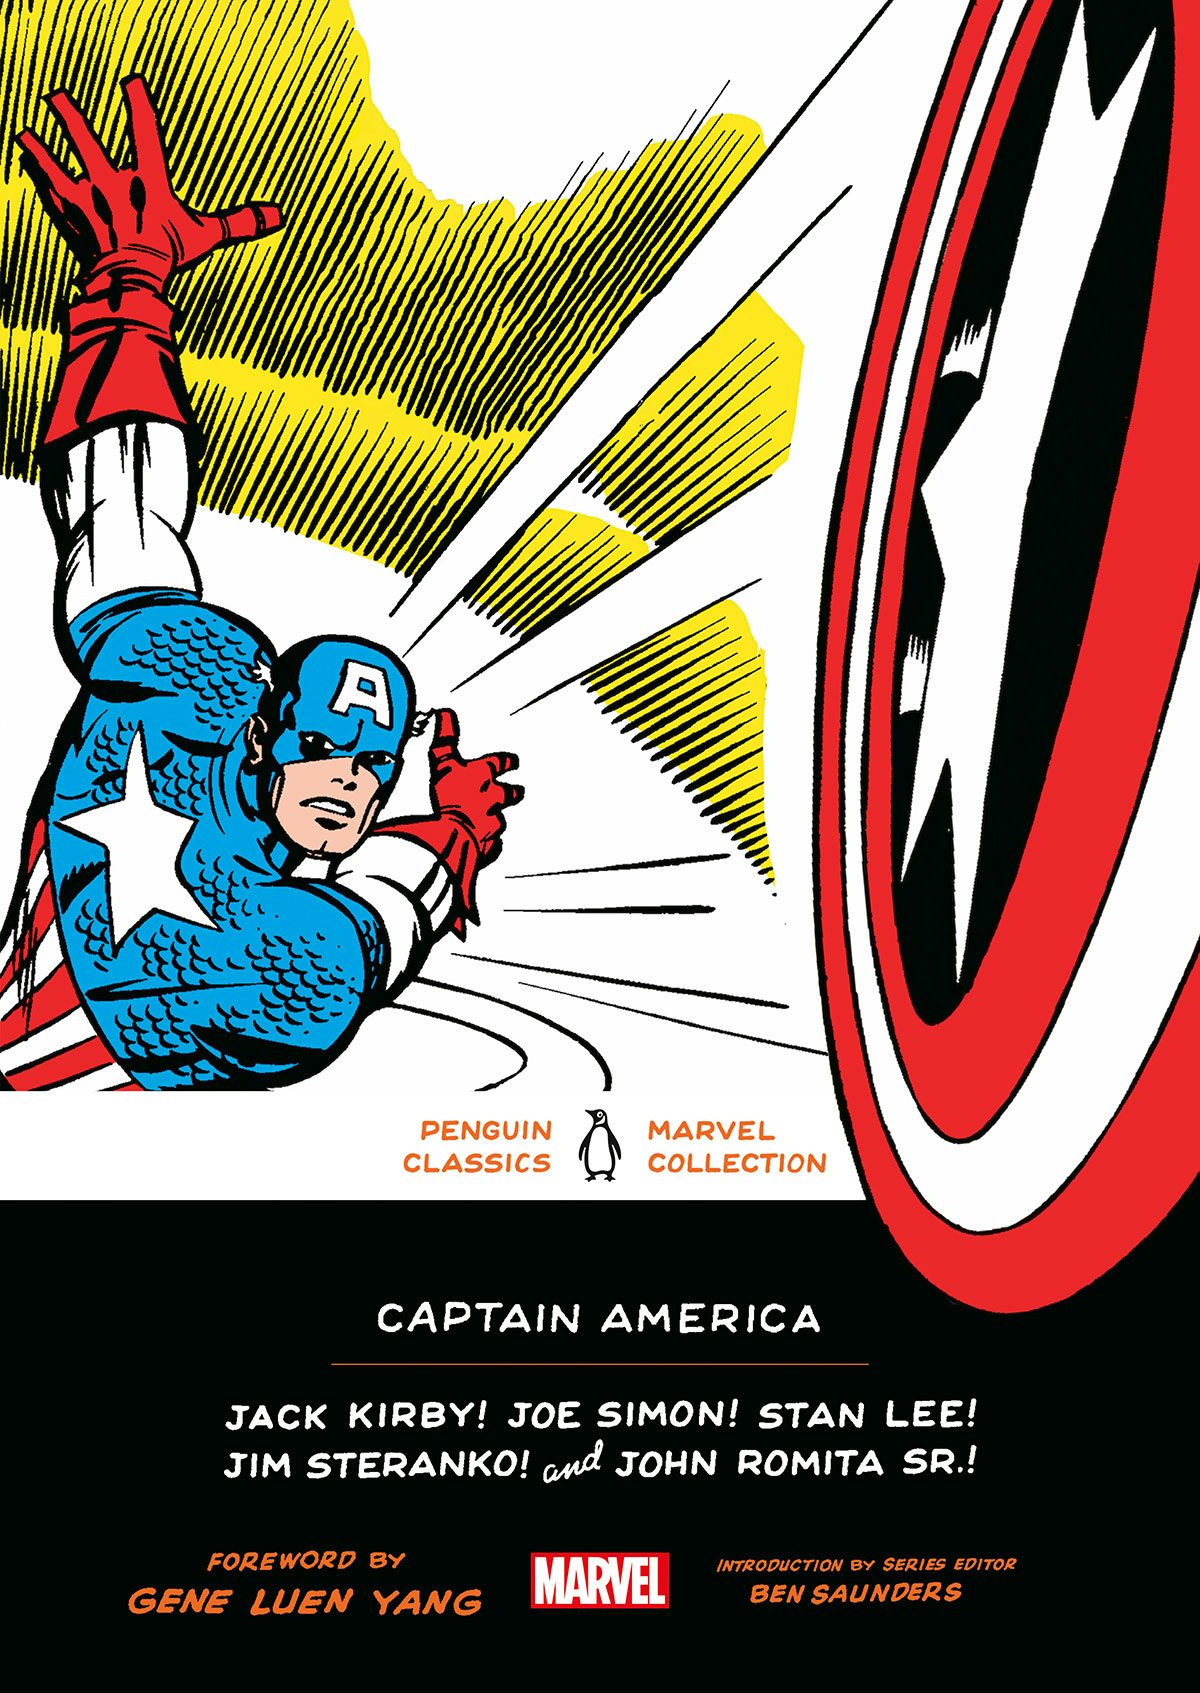 Penguin Marvel series cover featuring Captain America